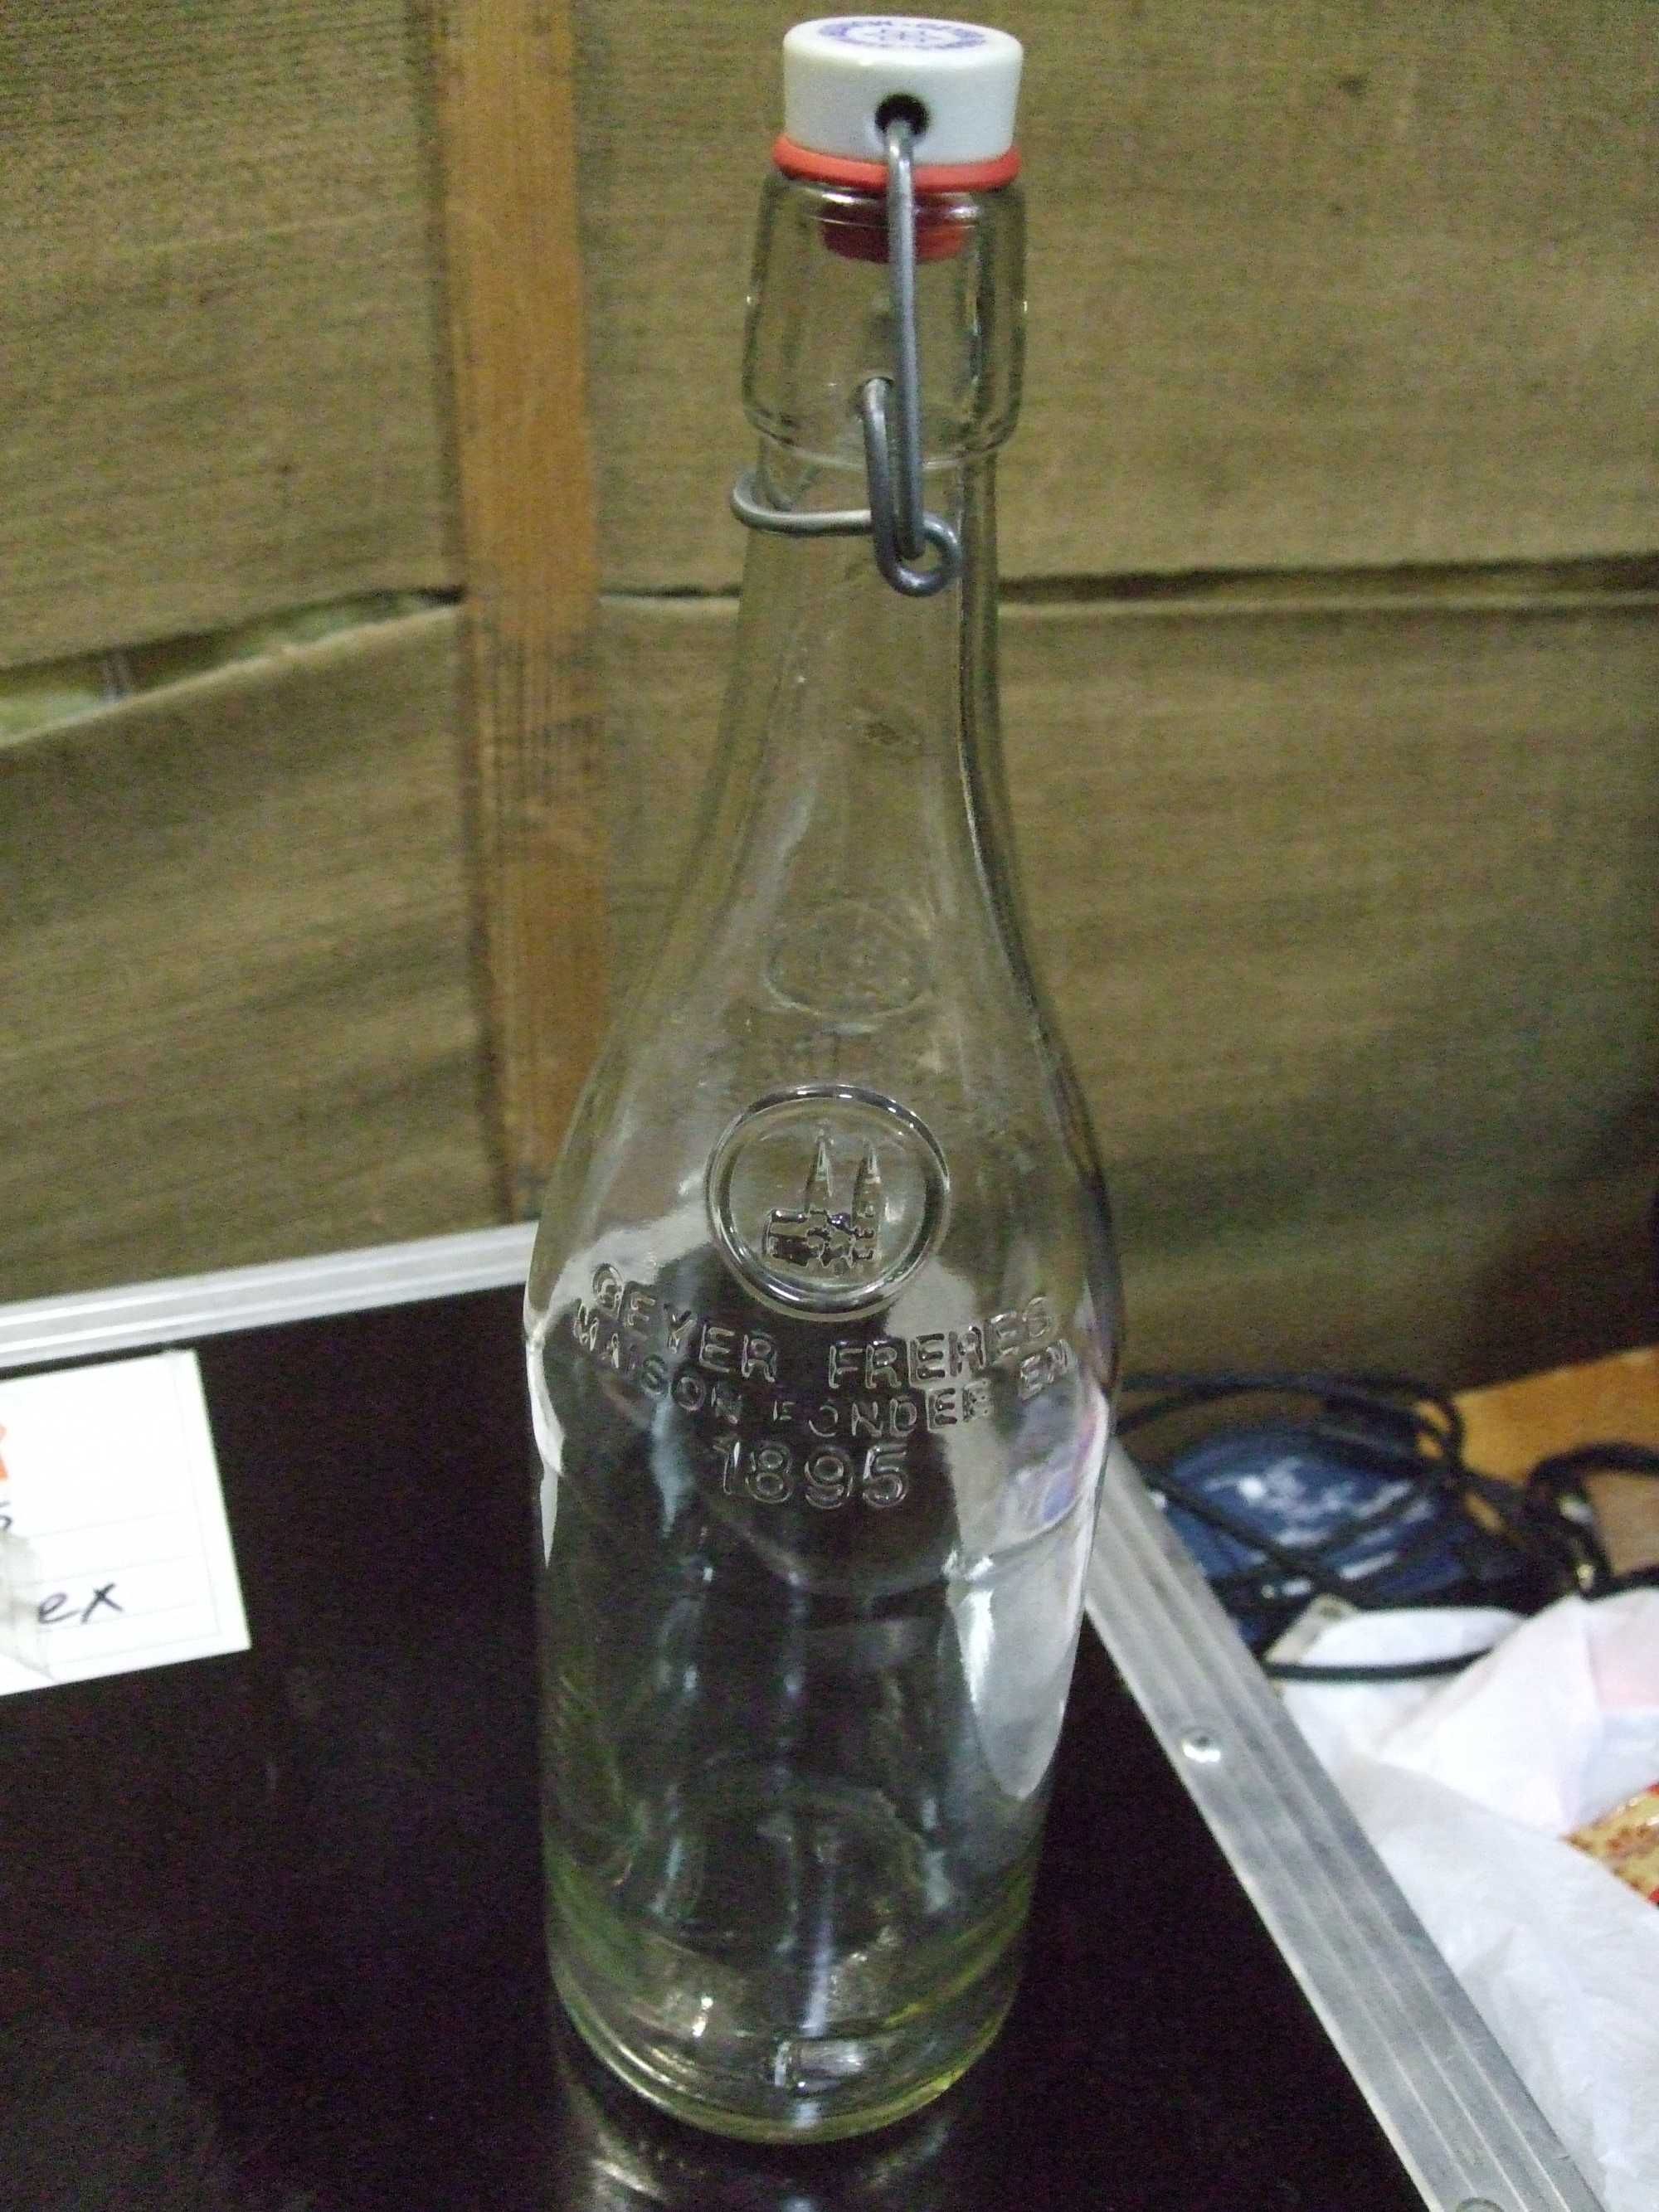 Продам скляну бутилку Geyer freres maison fondee en 1895